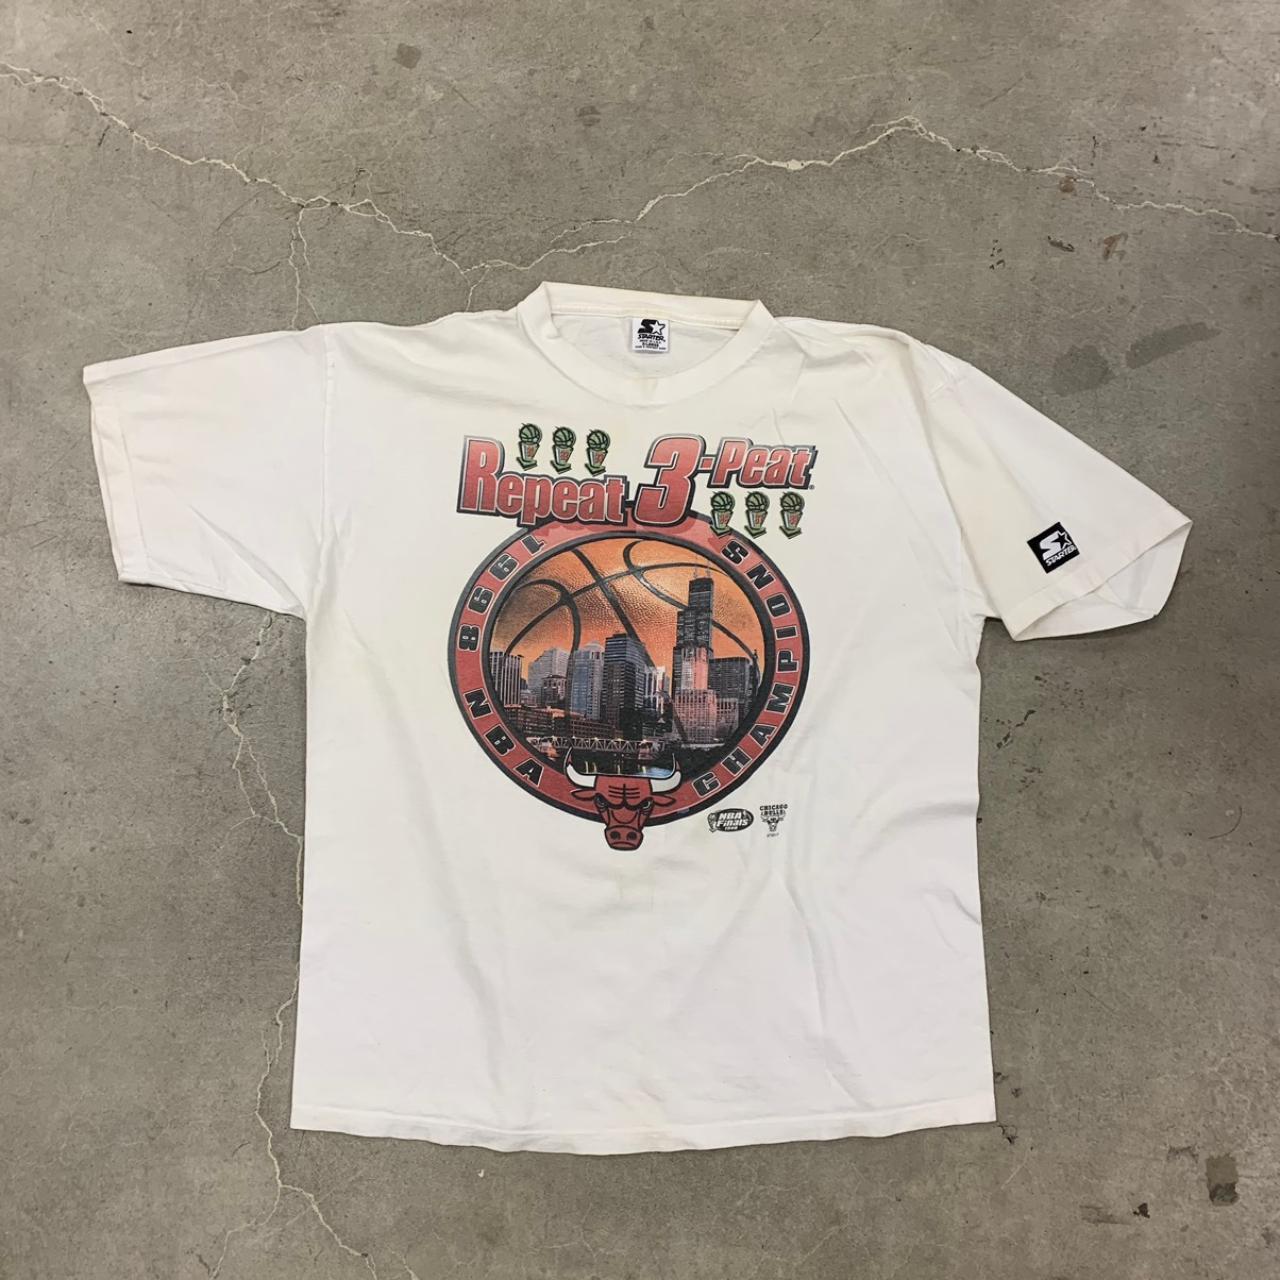 90s Chicago Bulls Repeat 3-peat NBA Champions T-shirt. Vintage 